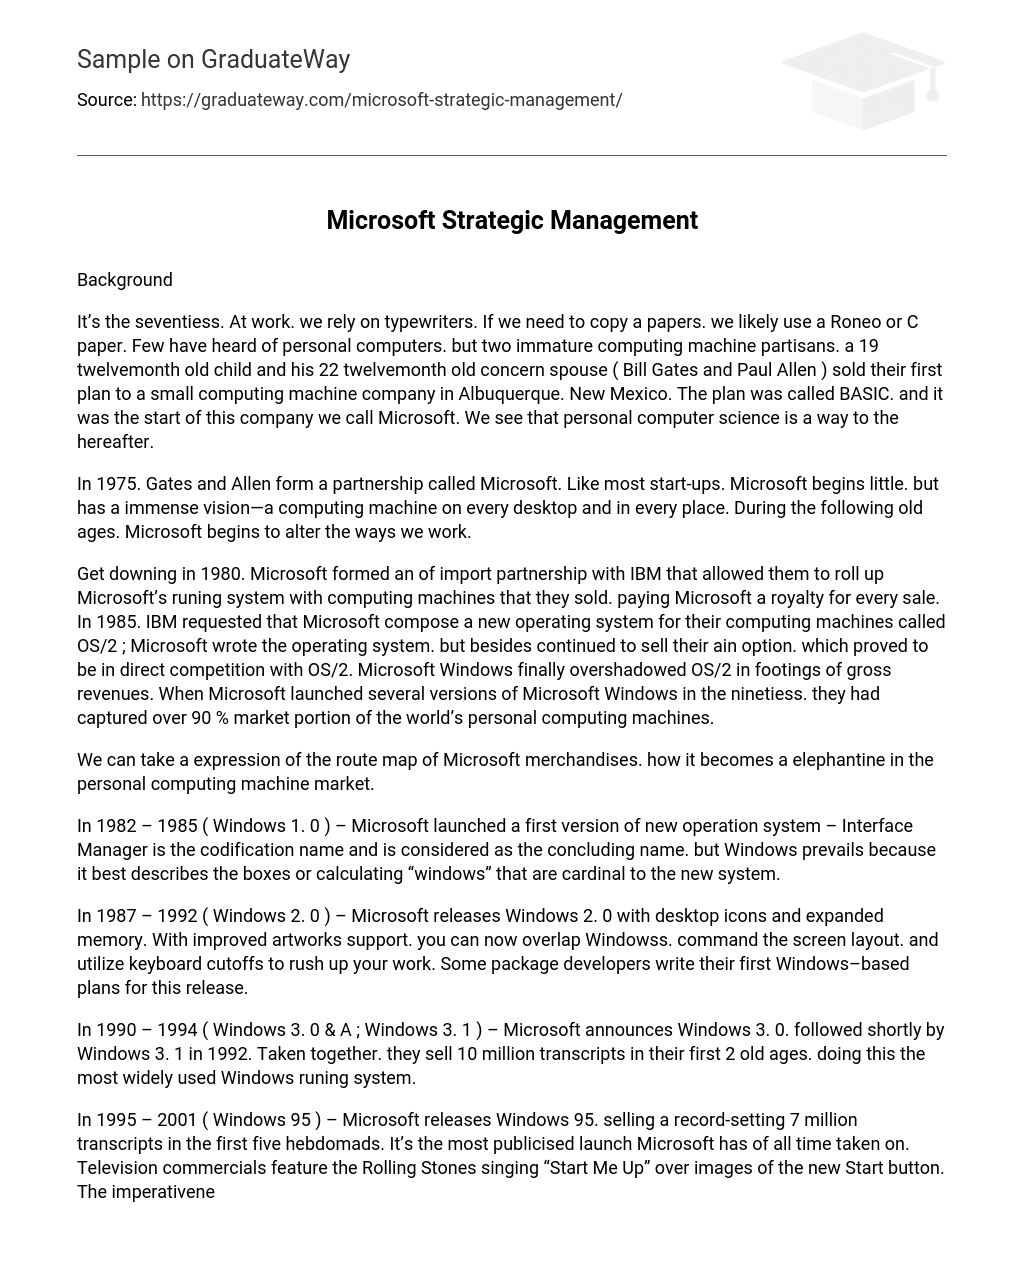 Microsoft Strategic Management